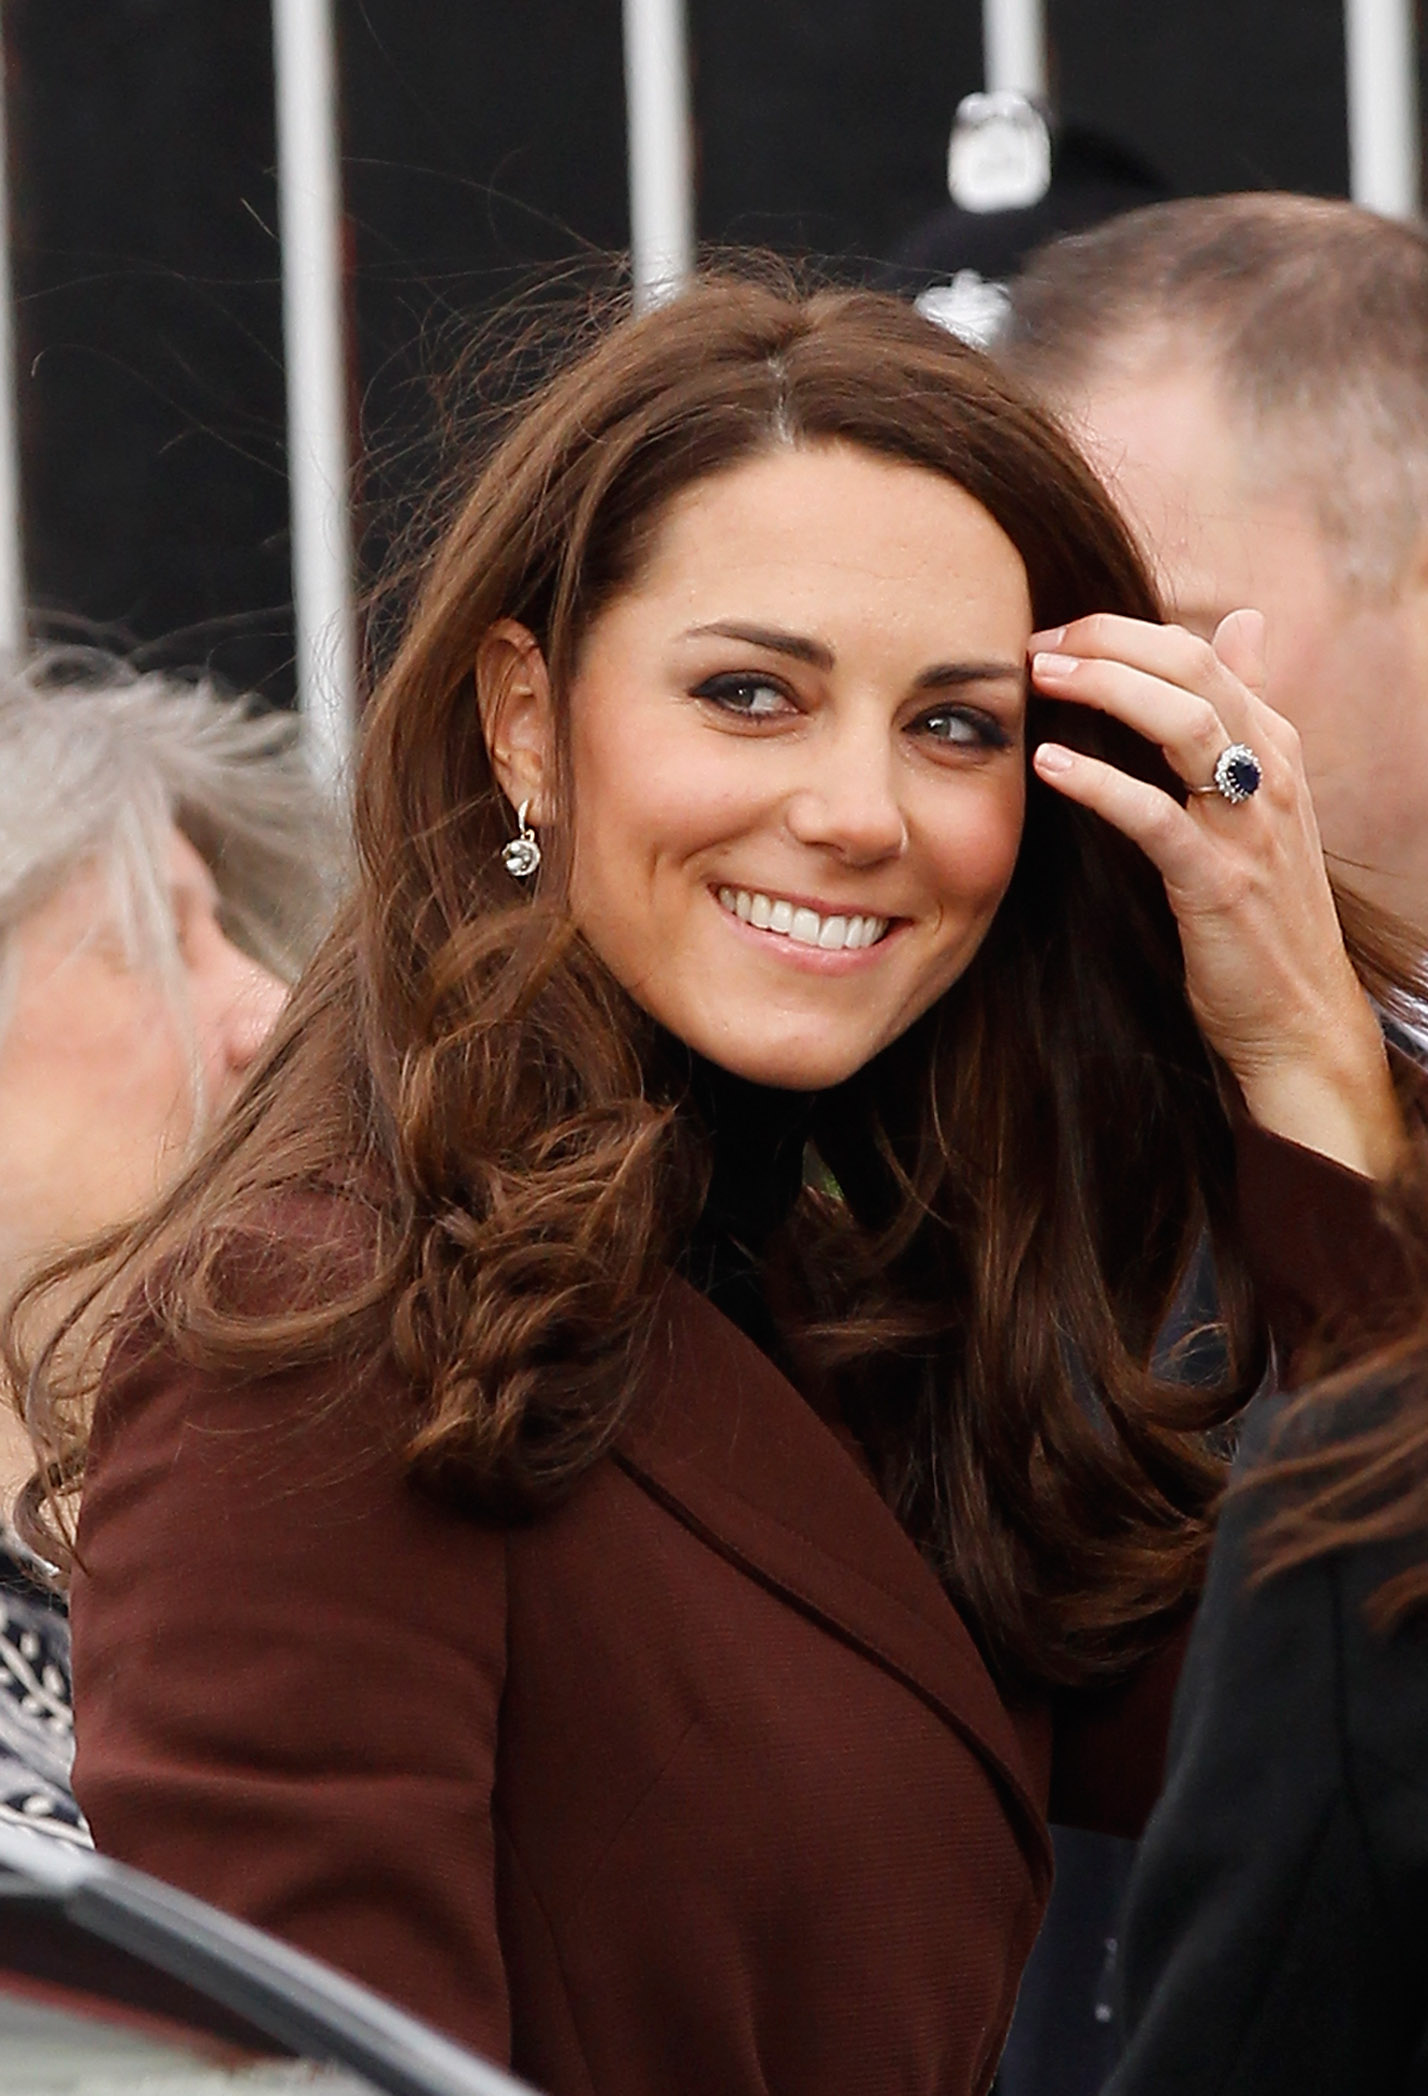 Kate Middleton's iconic smile